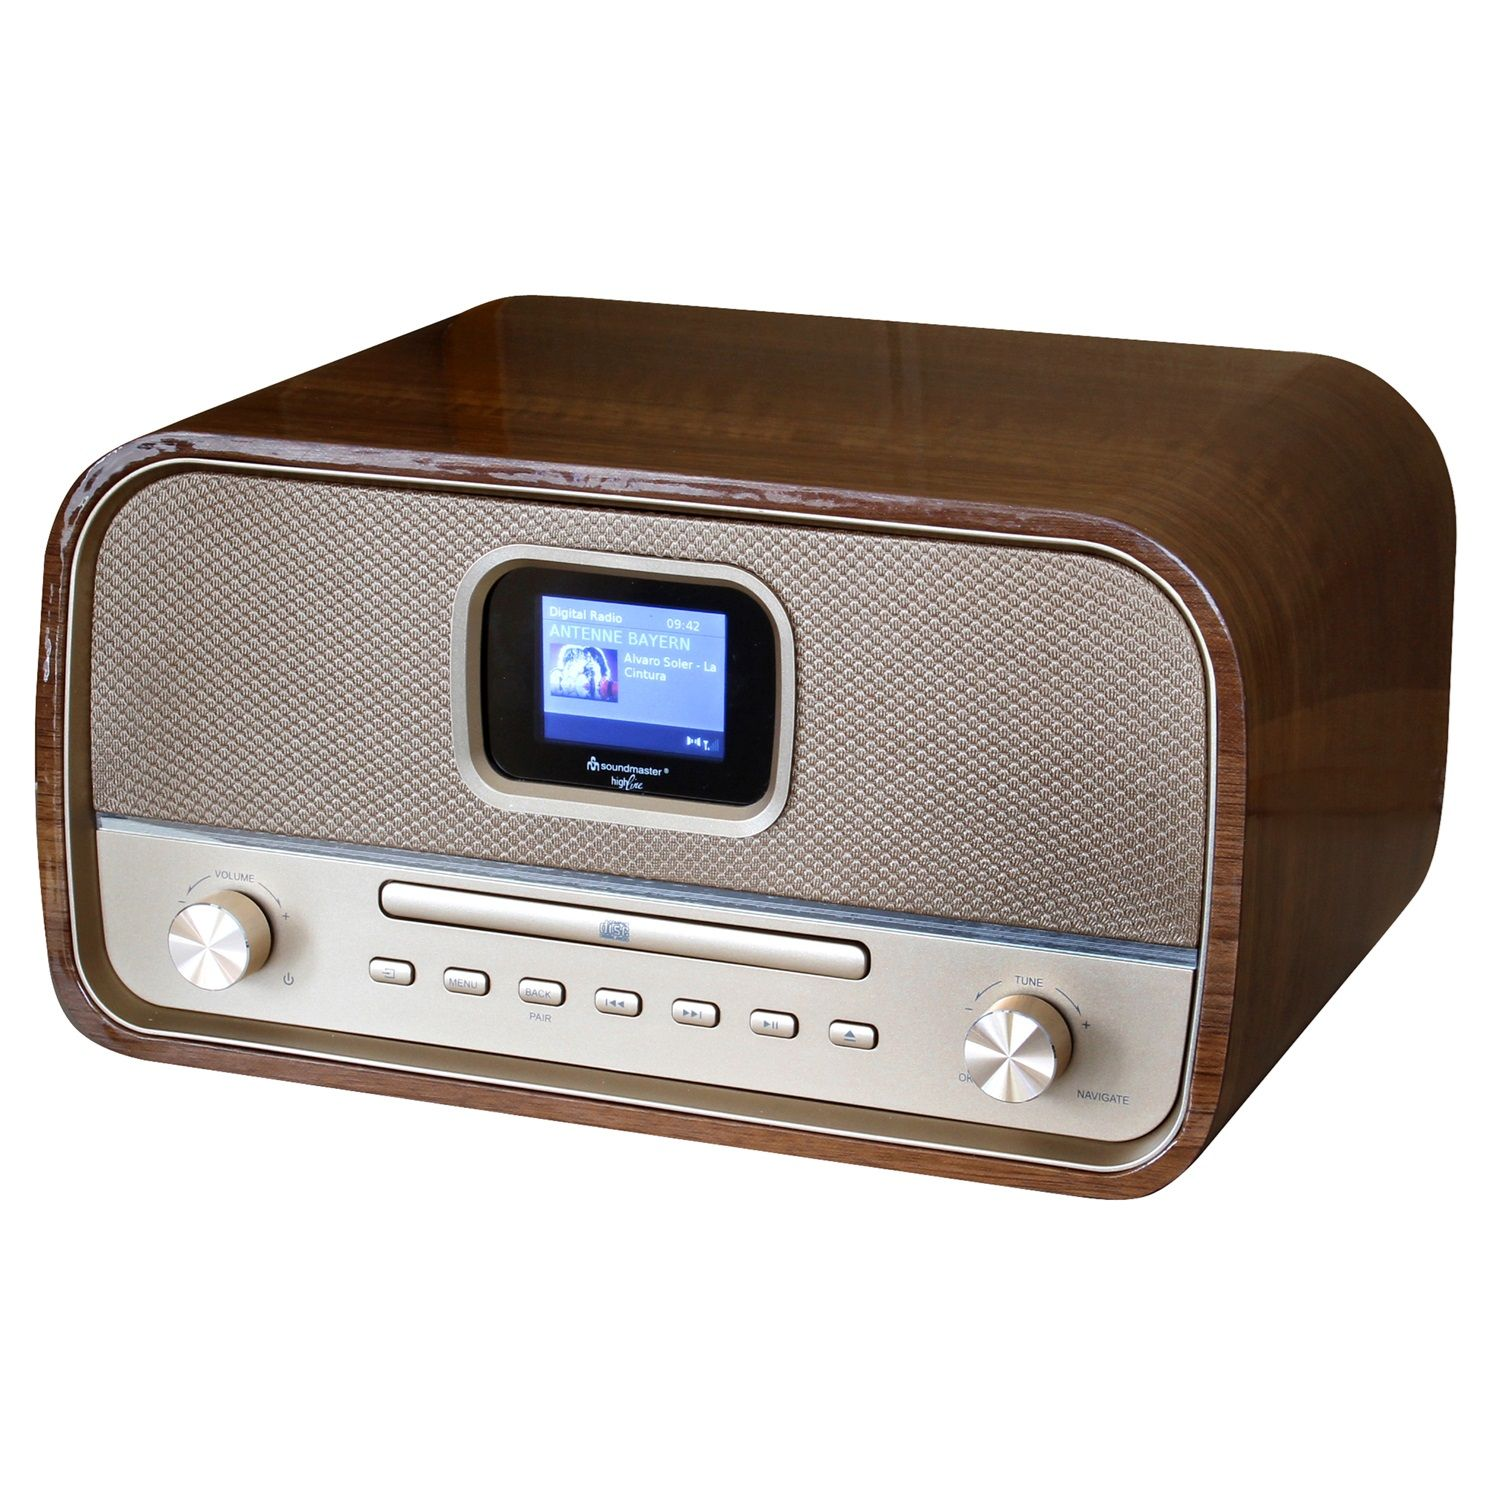 SOUNDMASTER DAB970BR1 Multifunktionsradio, DAB+, AM, Bluetooth, FM, FM, DAB+, DAB, holzoptik